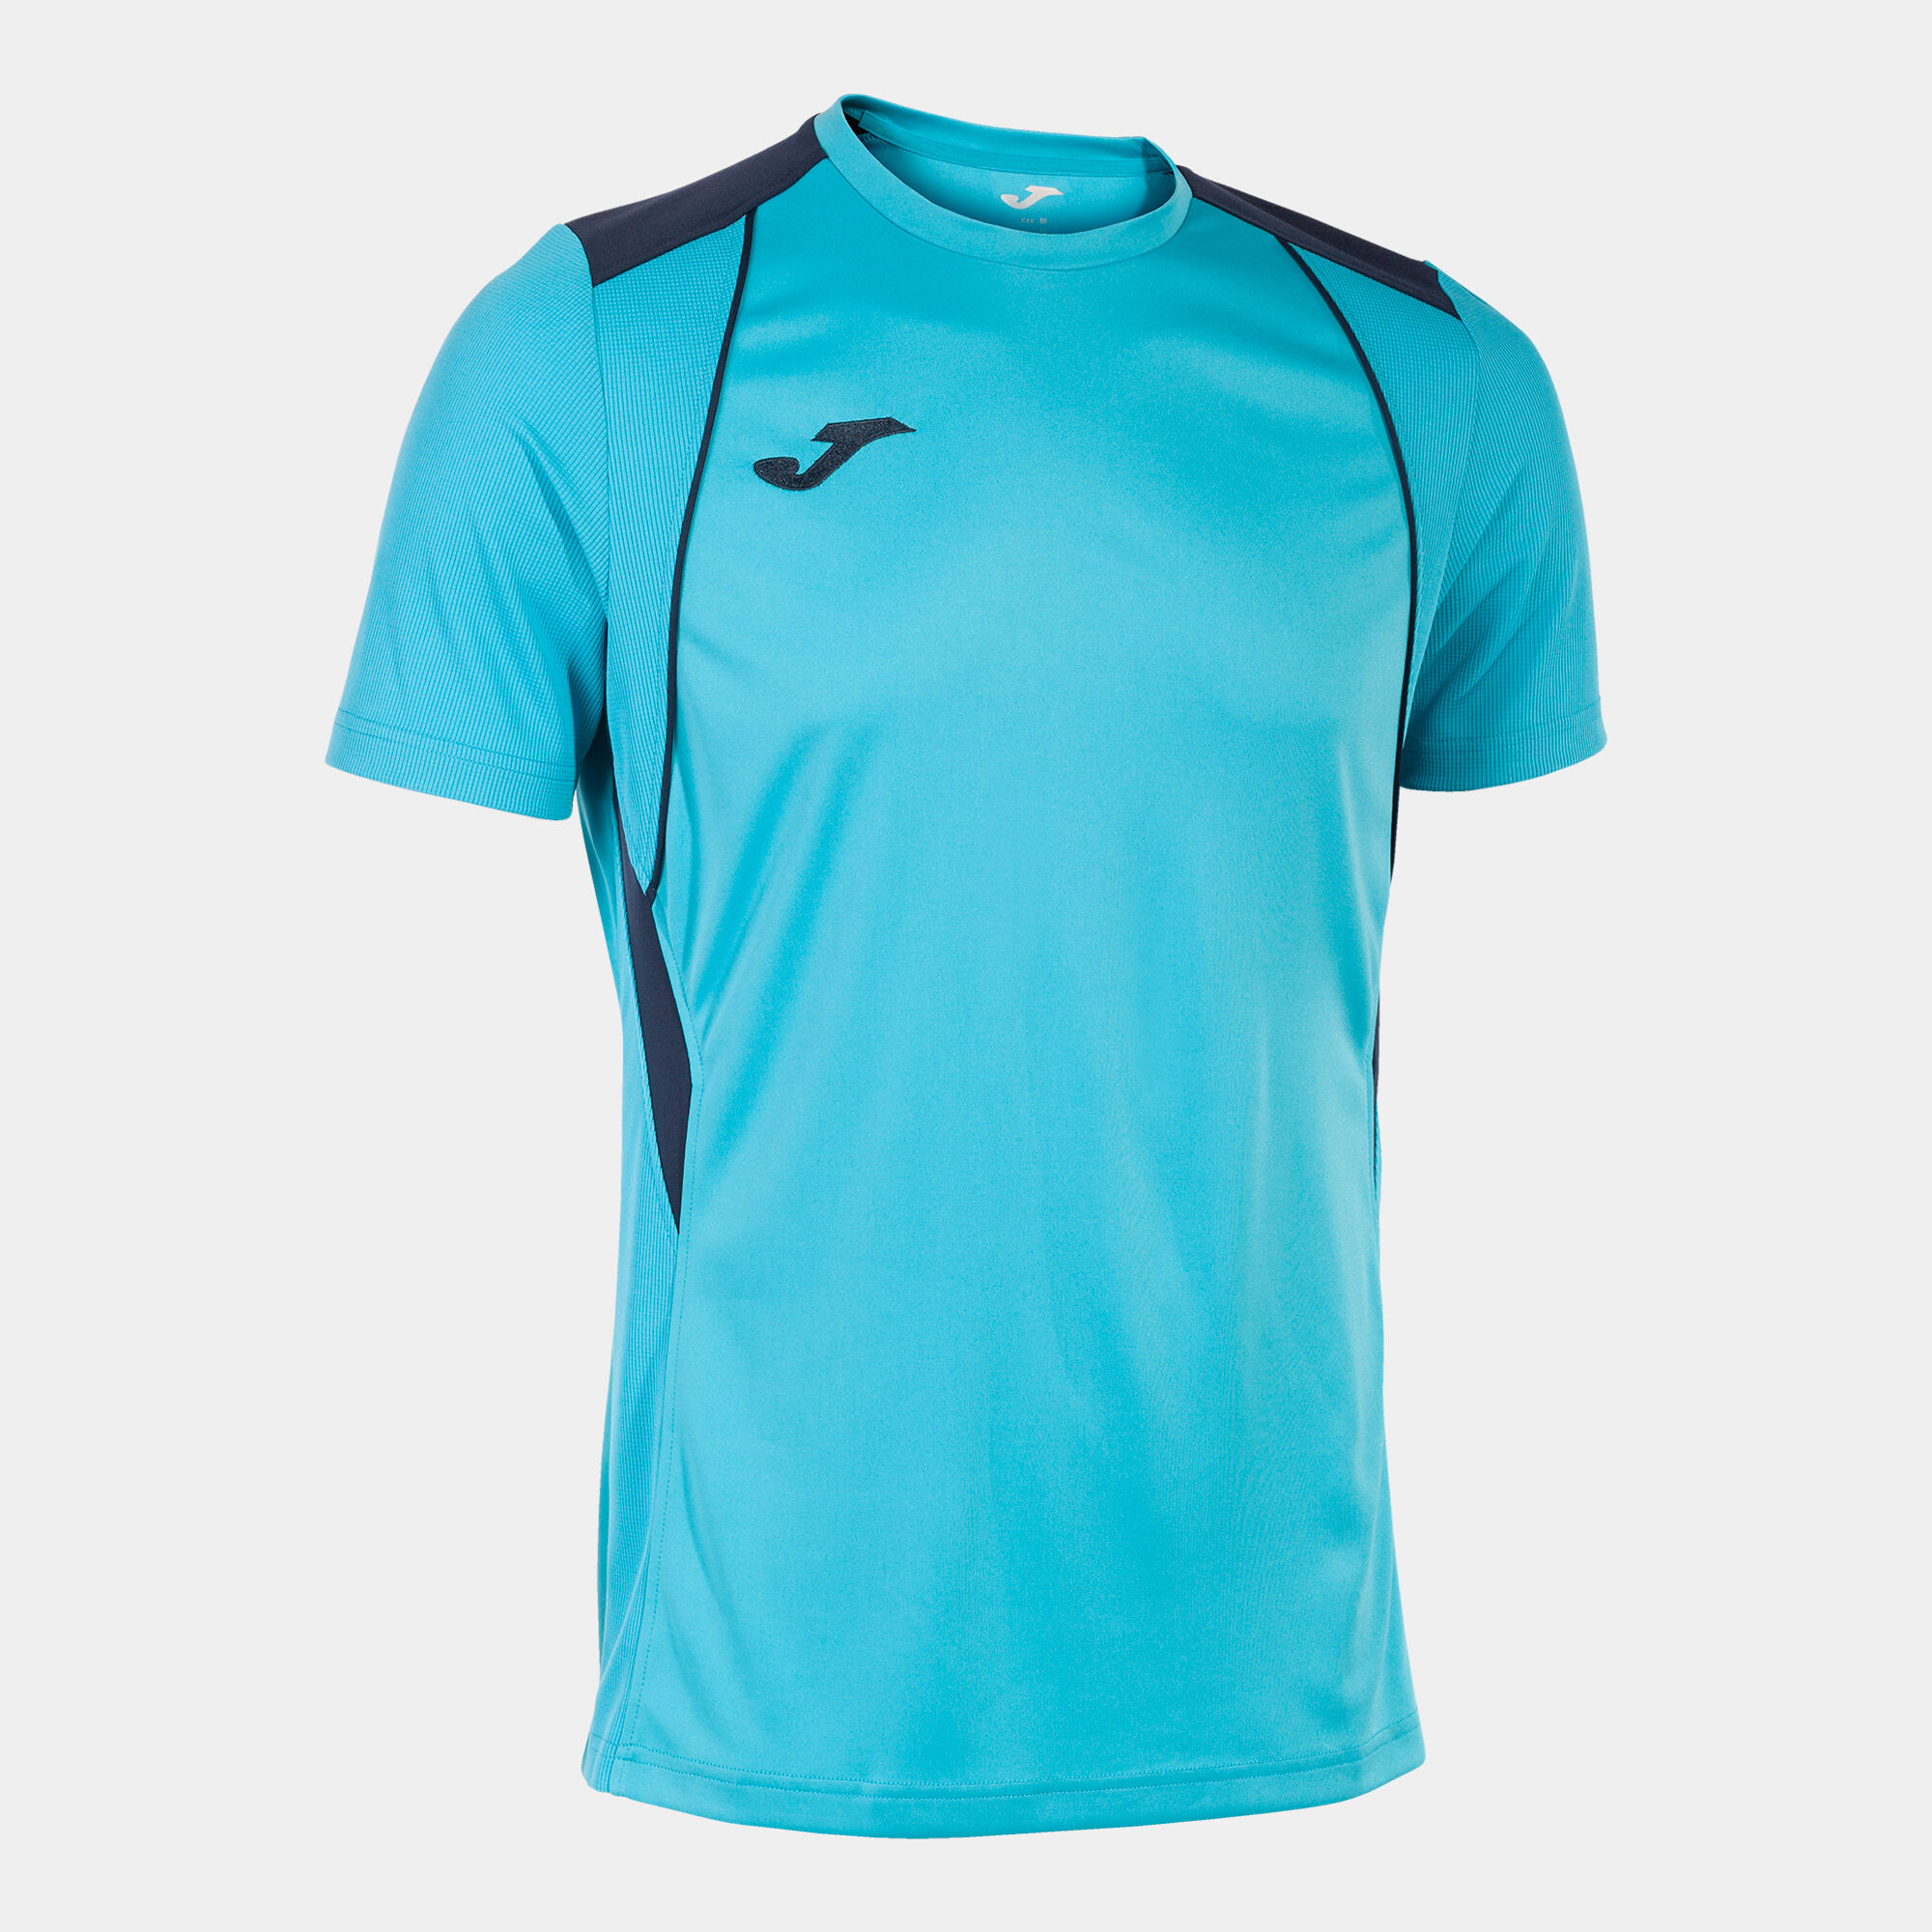 T-shirt manga curta homem Championship VII azul-turquesa fluorescente azul marinho